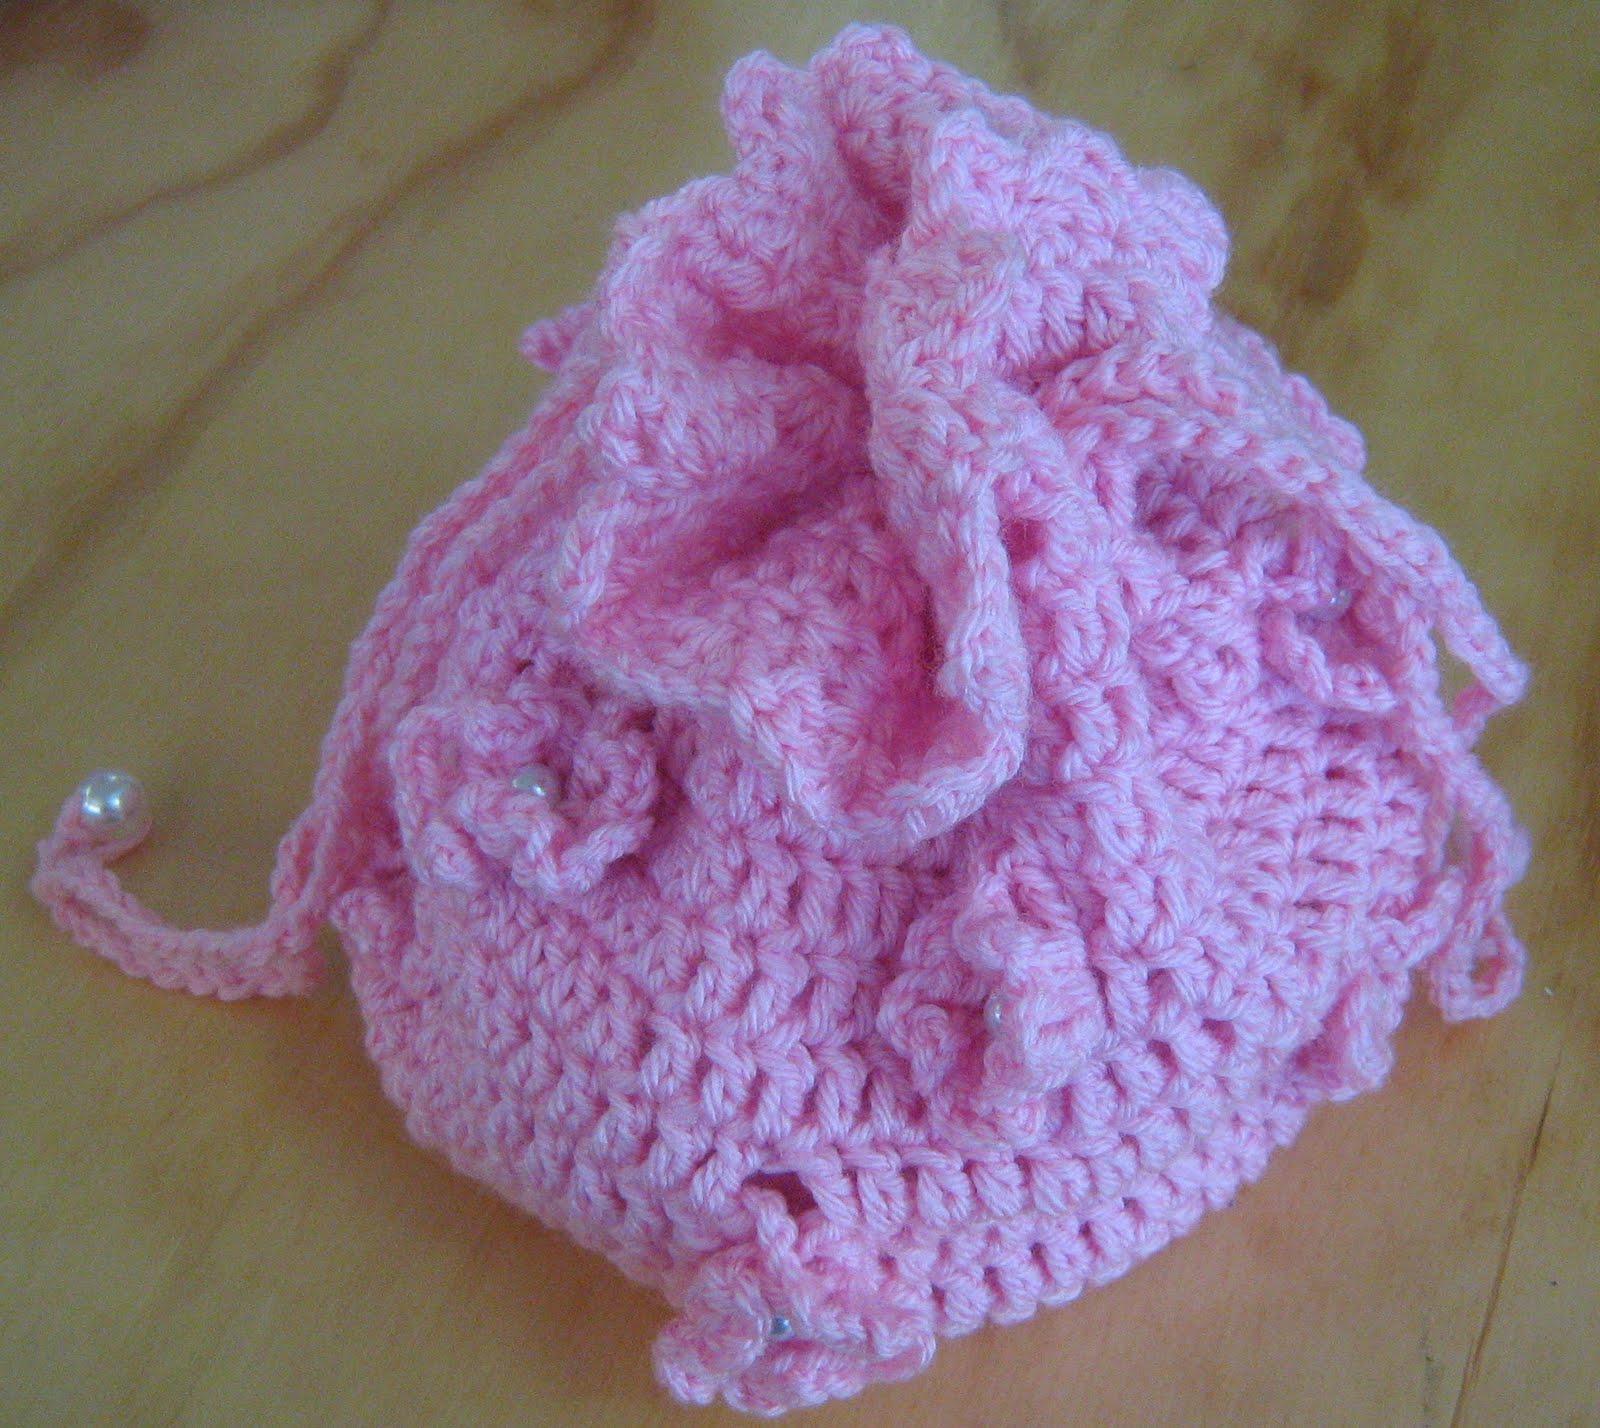 Nadia's crochet